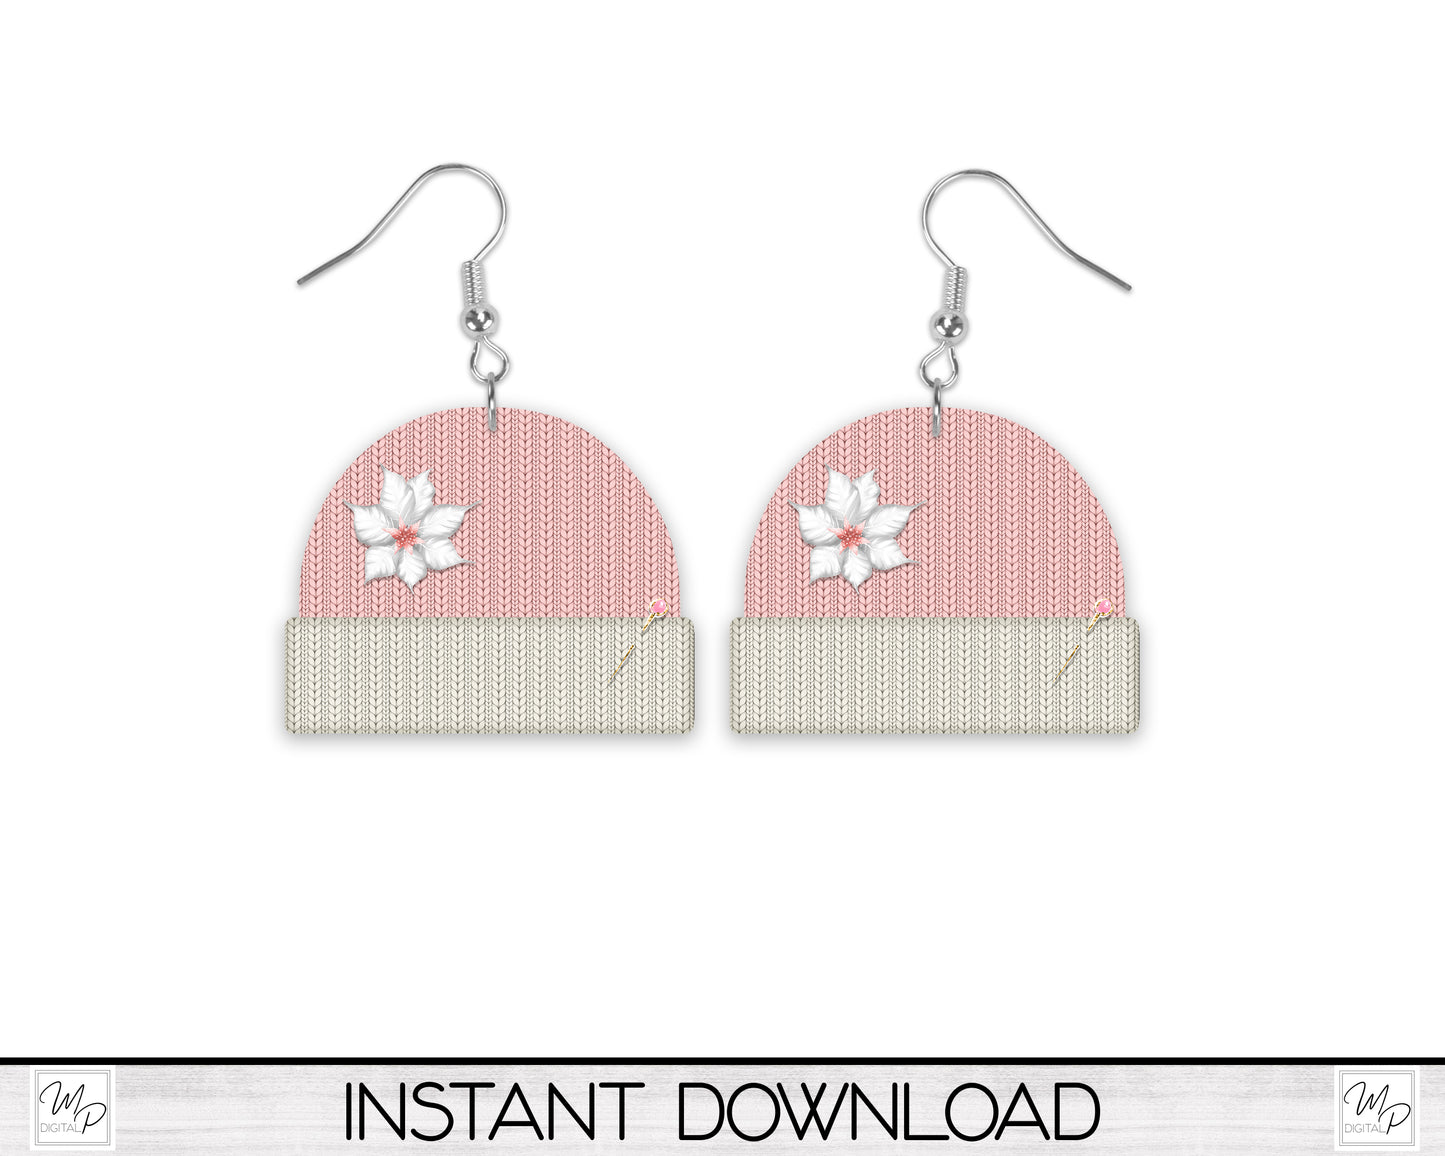 Pink Christmas Beanie Ornament PNG Design, Sublimation Design Download